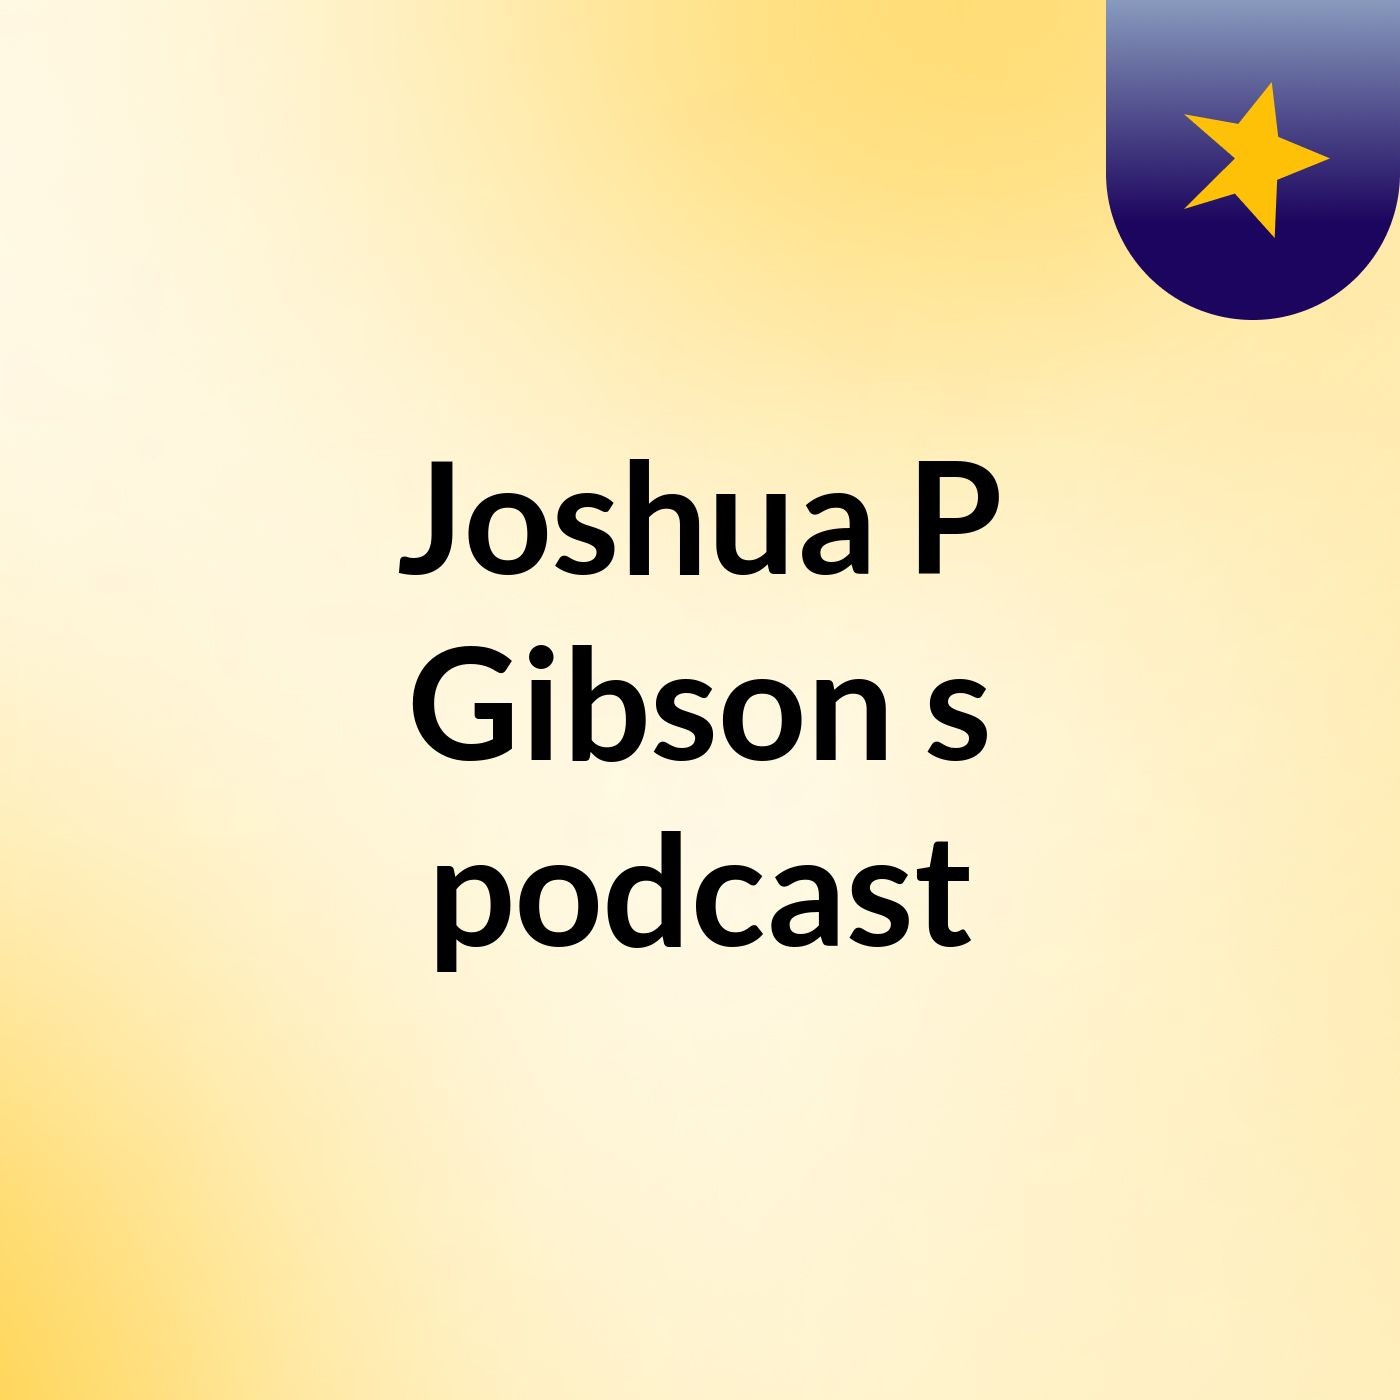 Joshua P Gibson's podcast